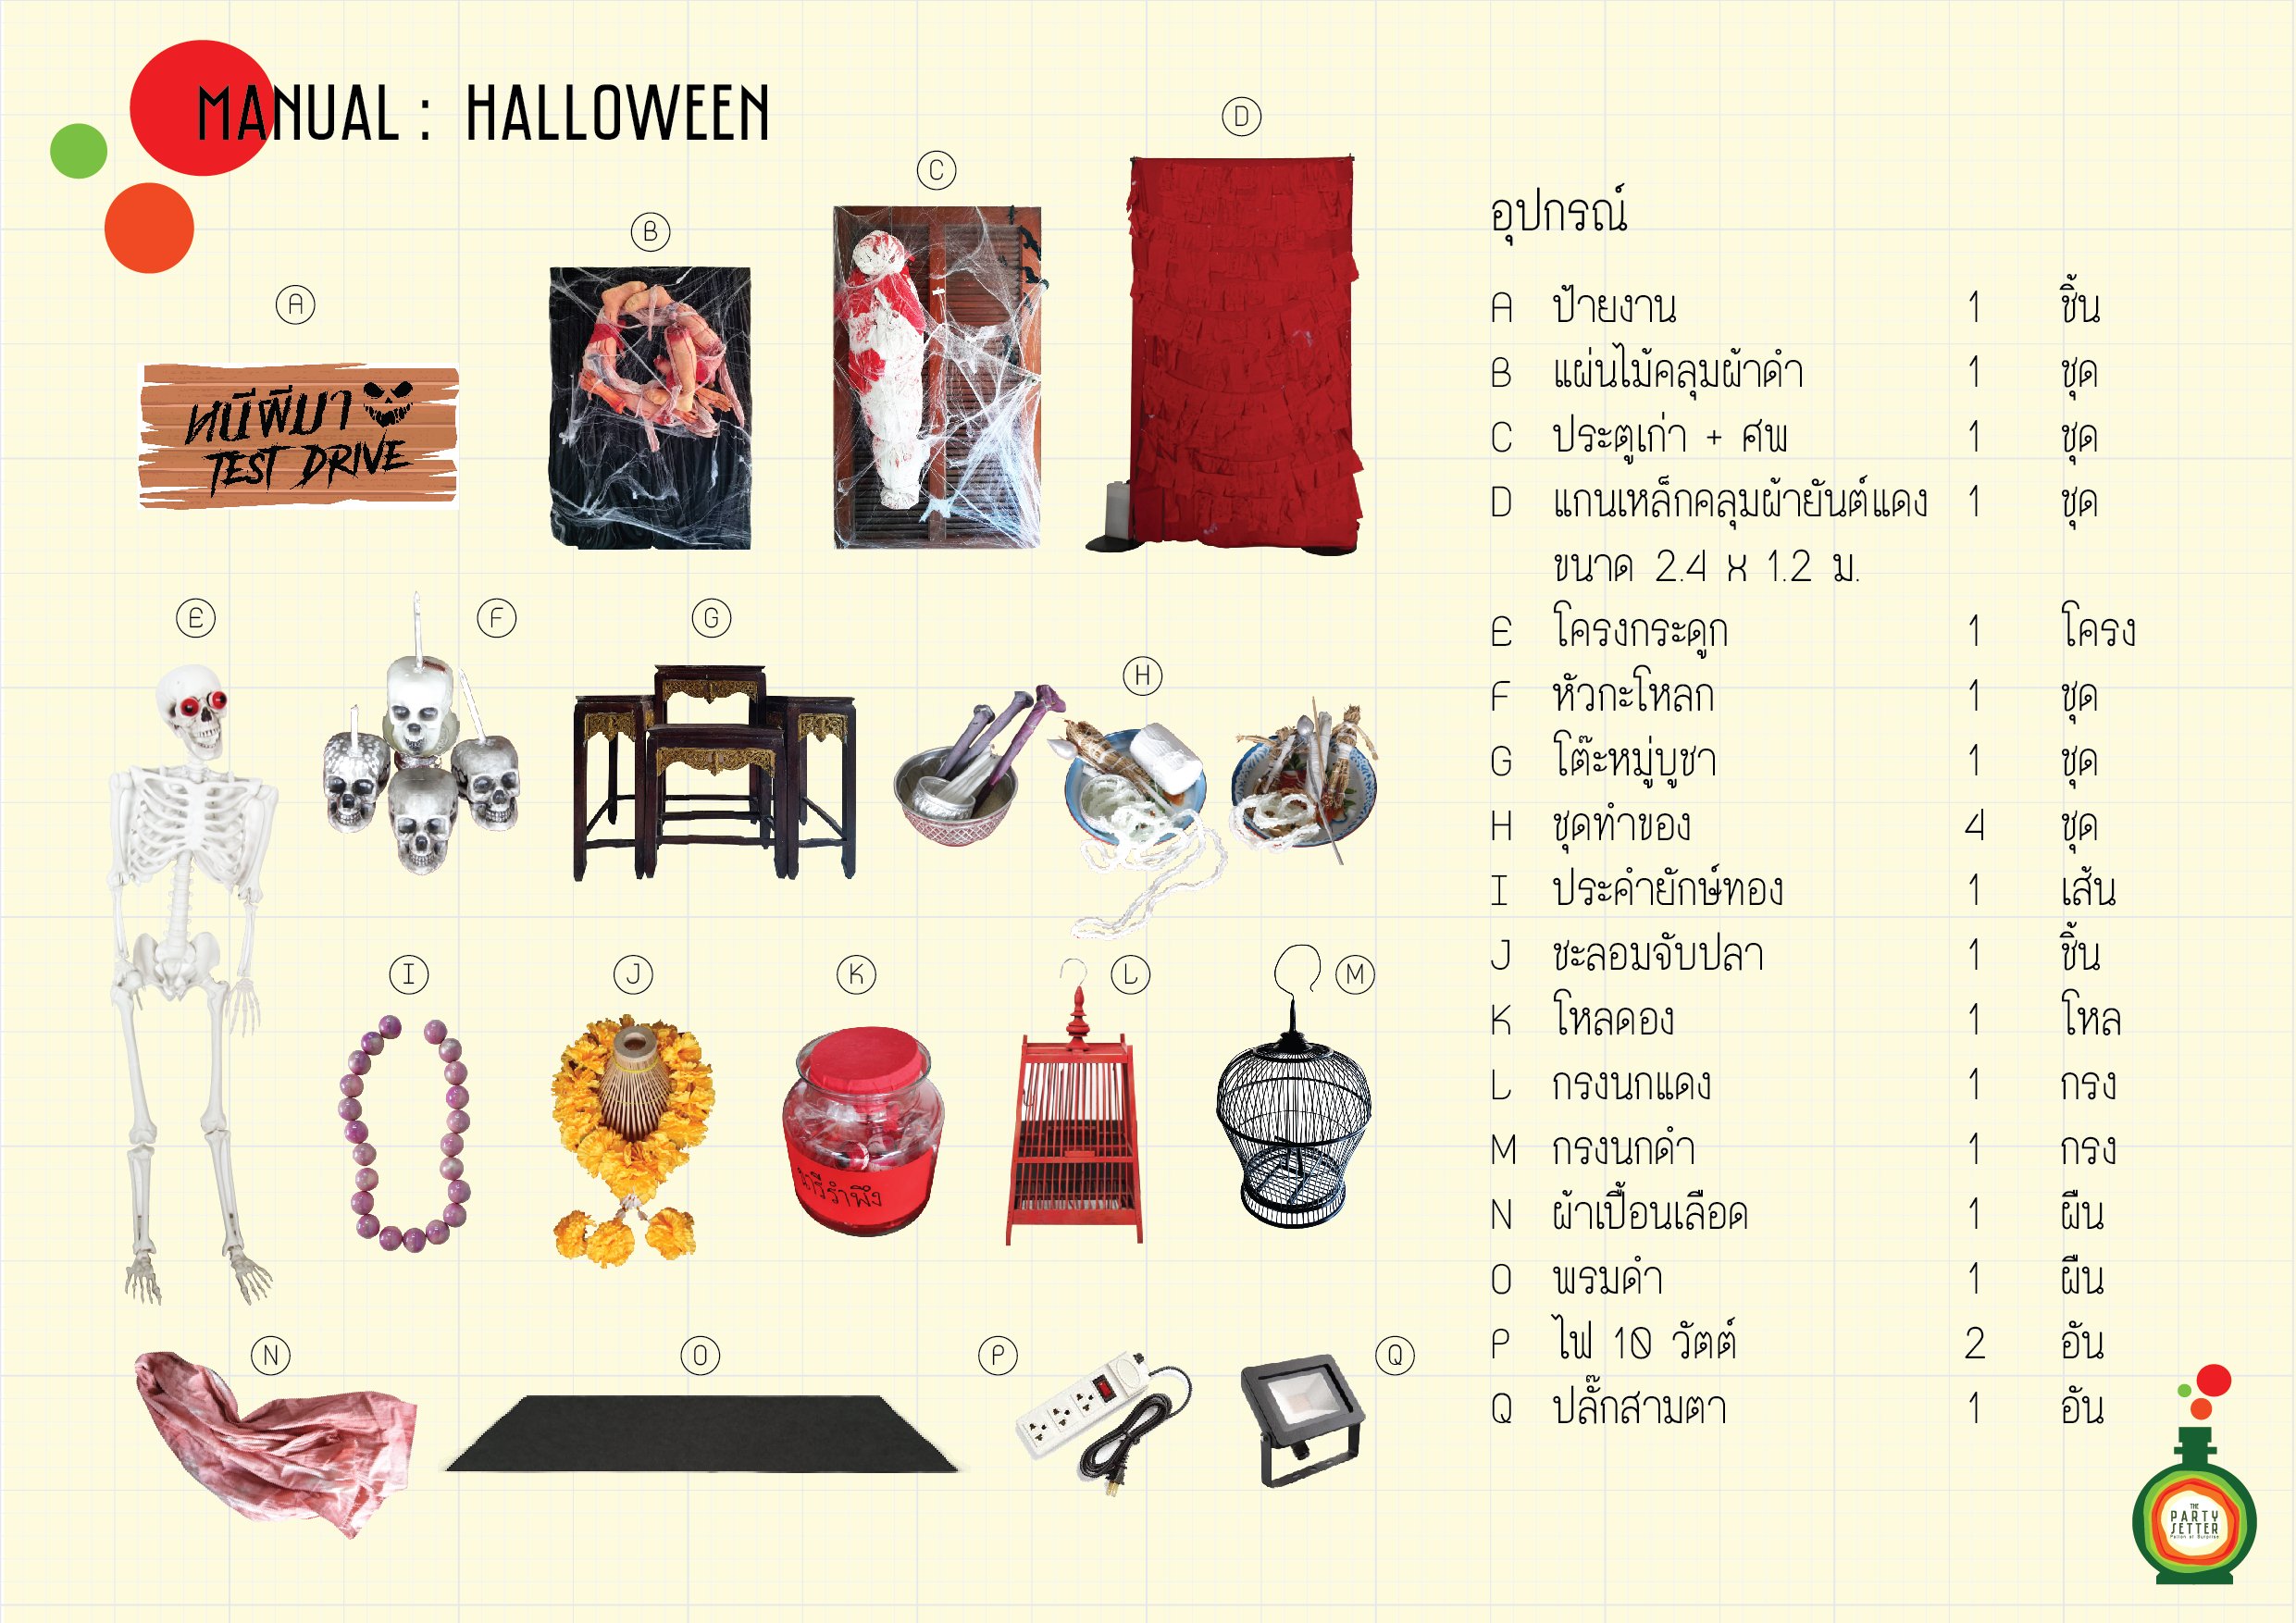 Manual_Halloween_02-00-01.jpg